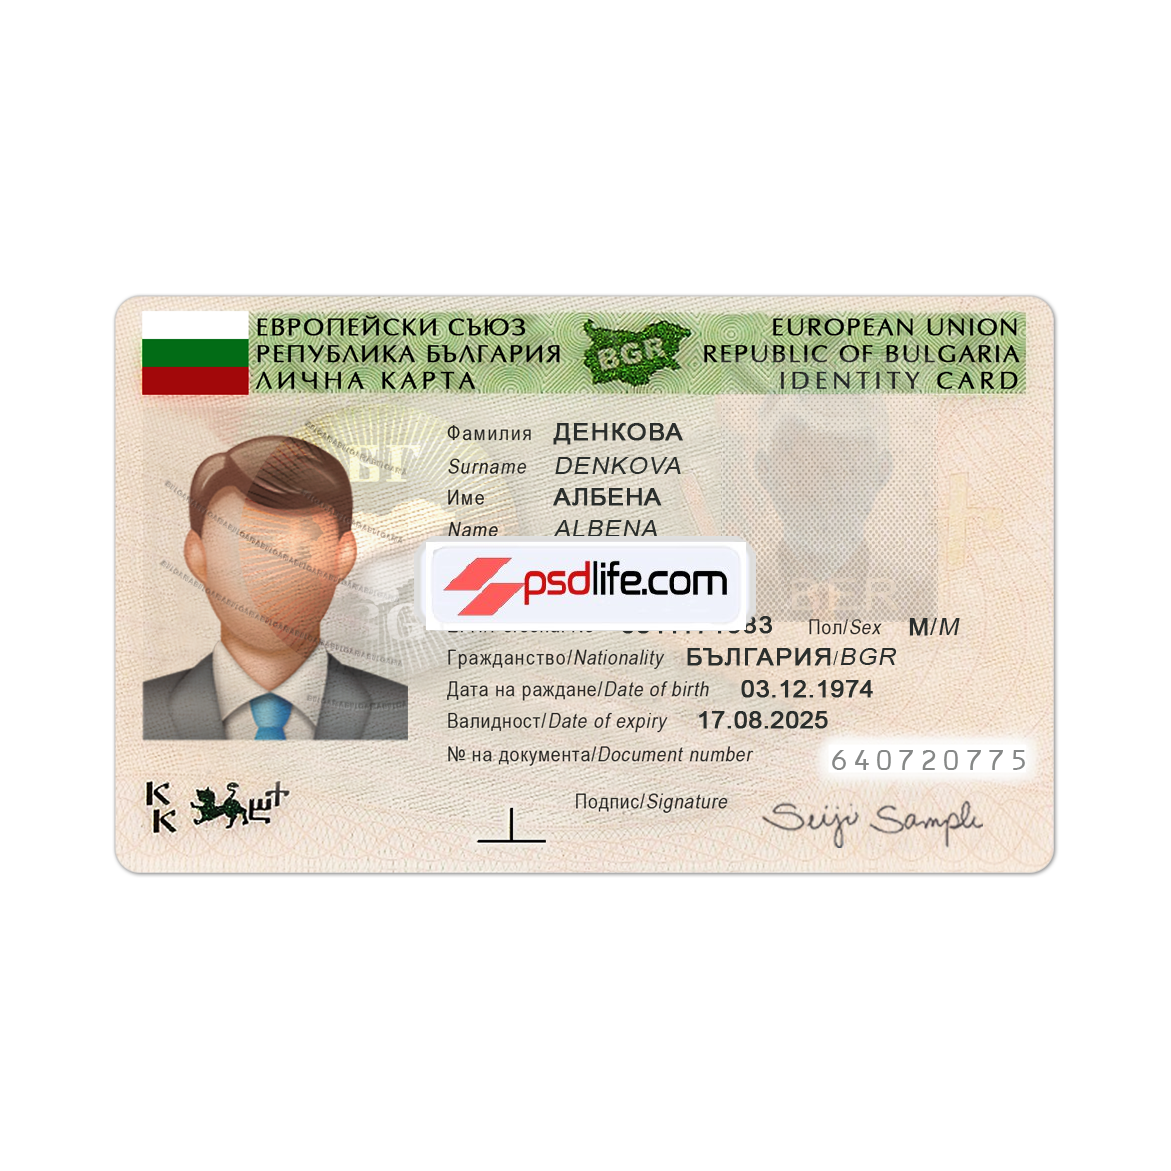 Bulgaria fake id card template psd format editable | fake bulgarian id ...